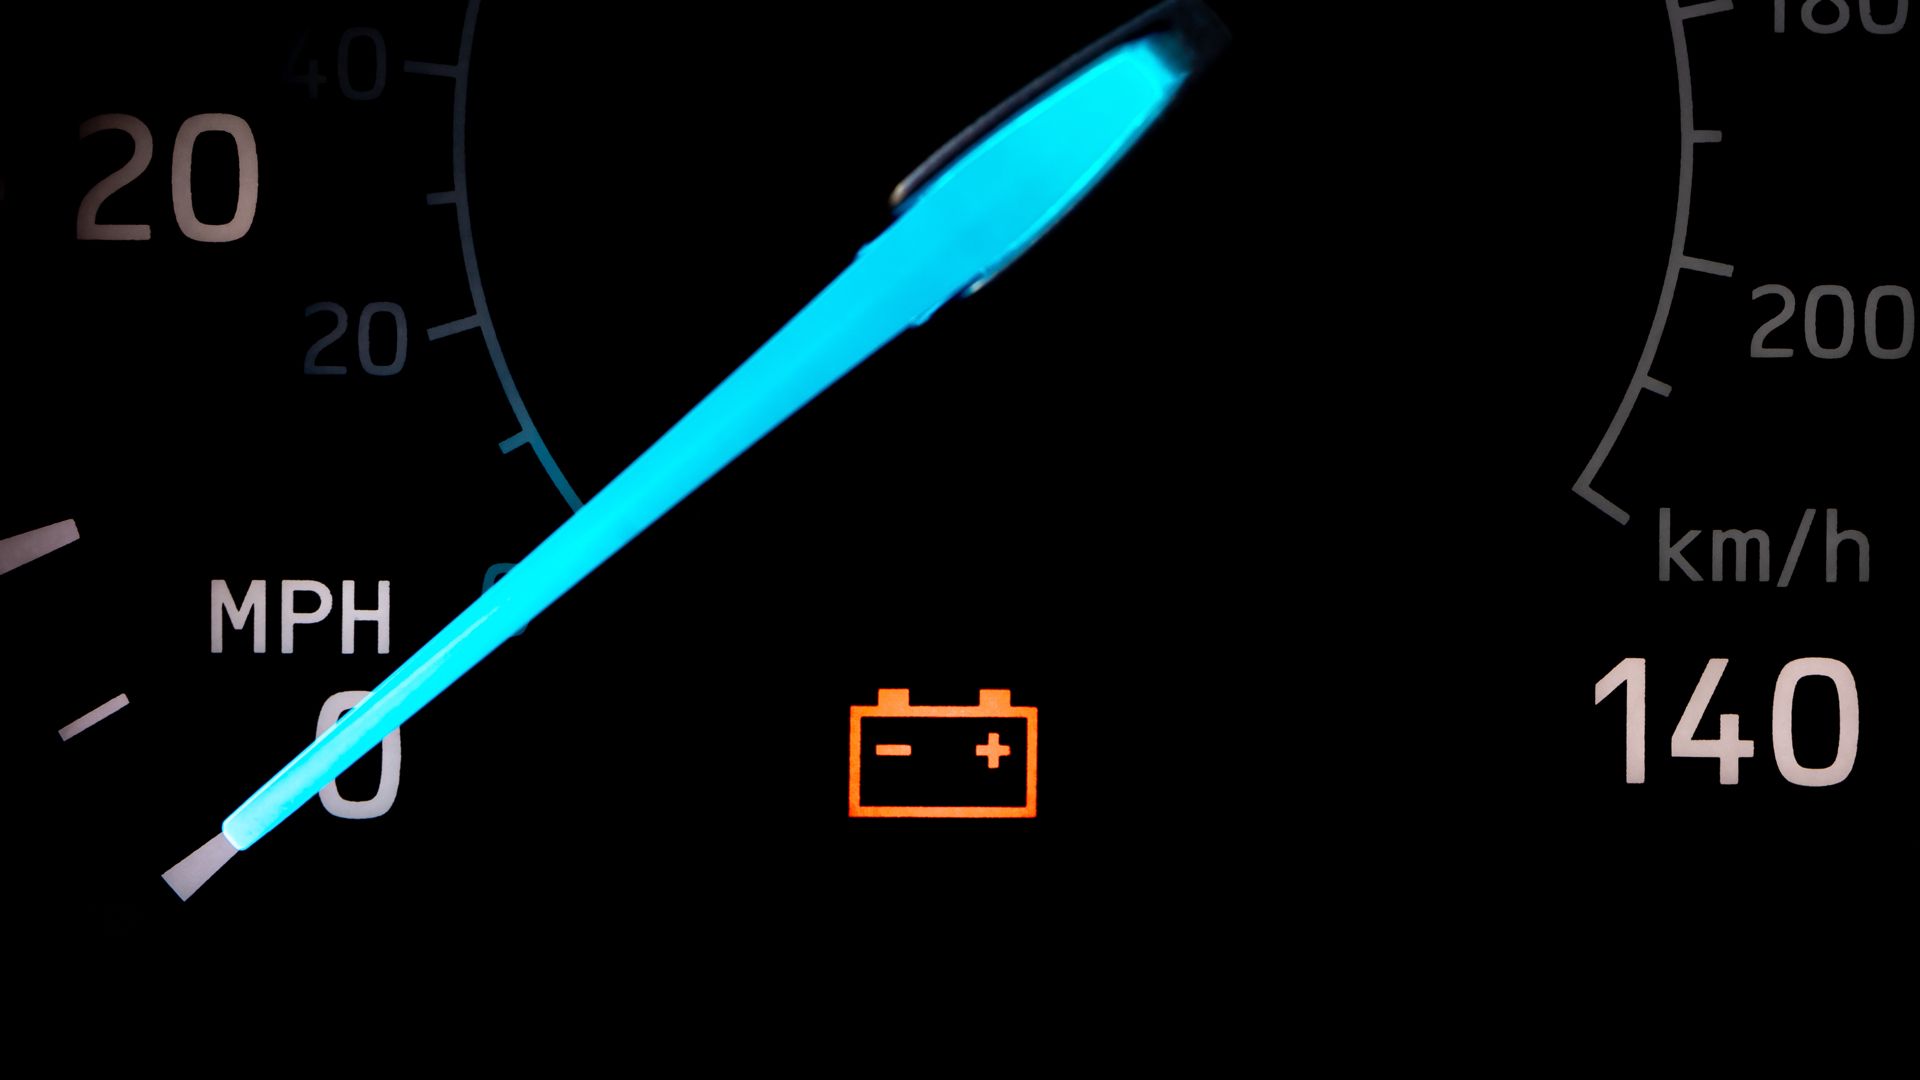 Closeup of a car battery warning light on dashboard.